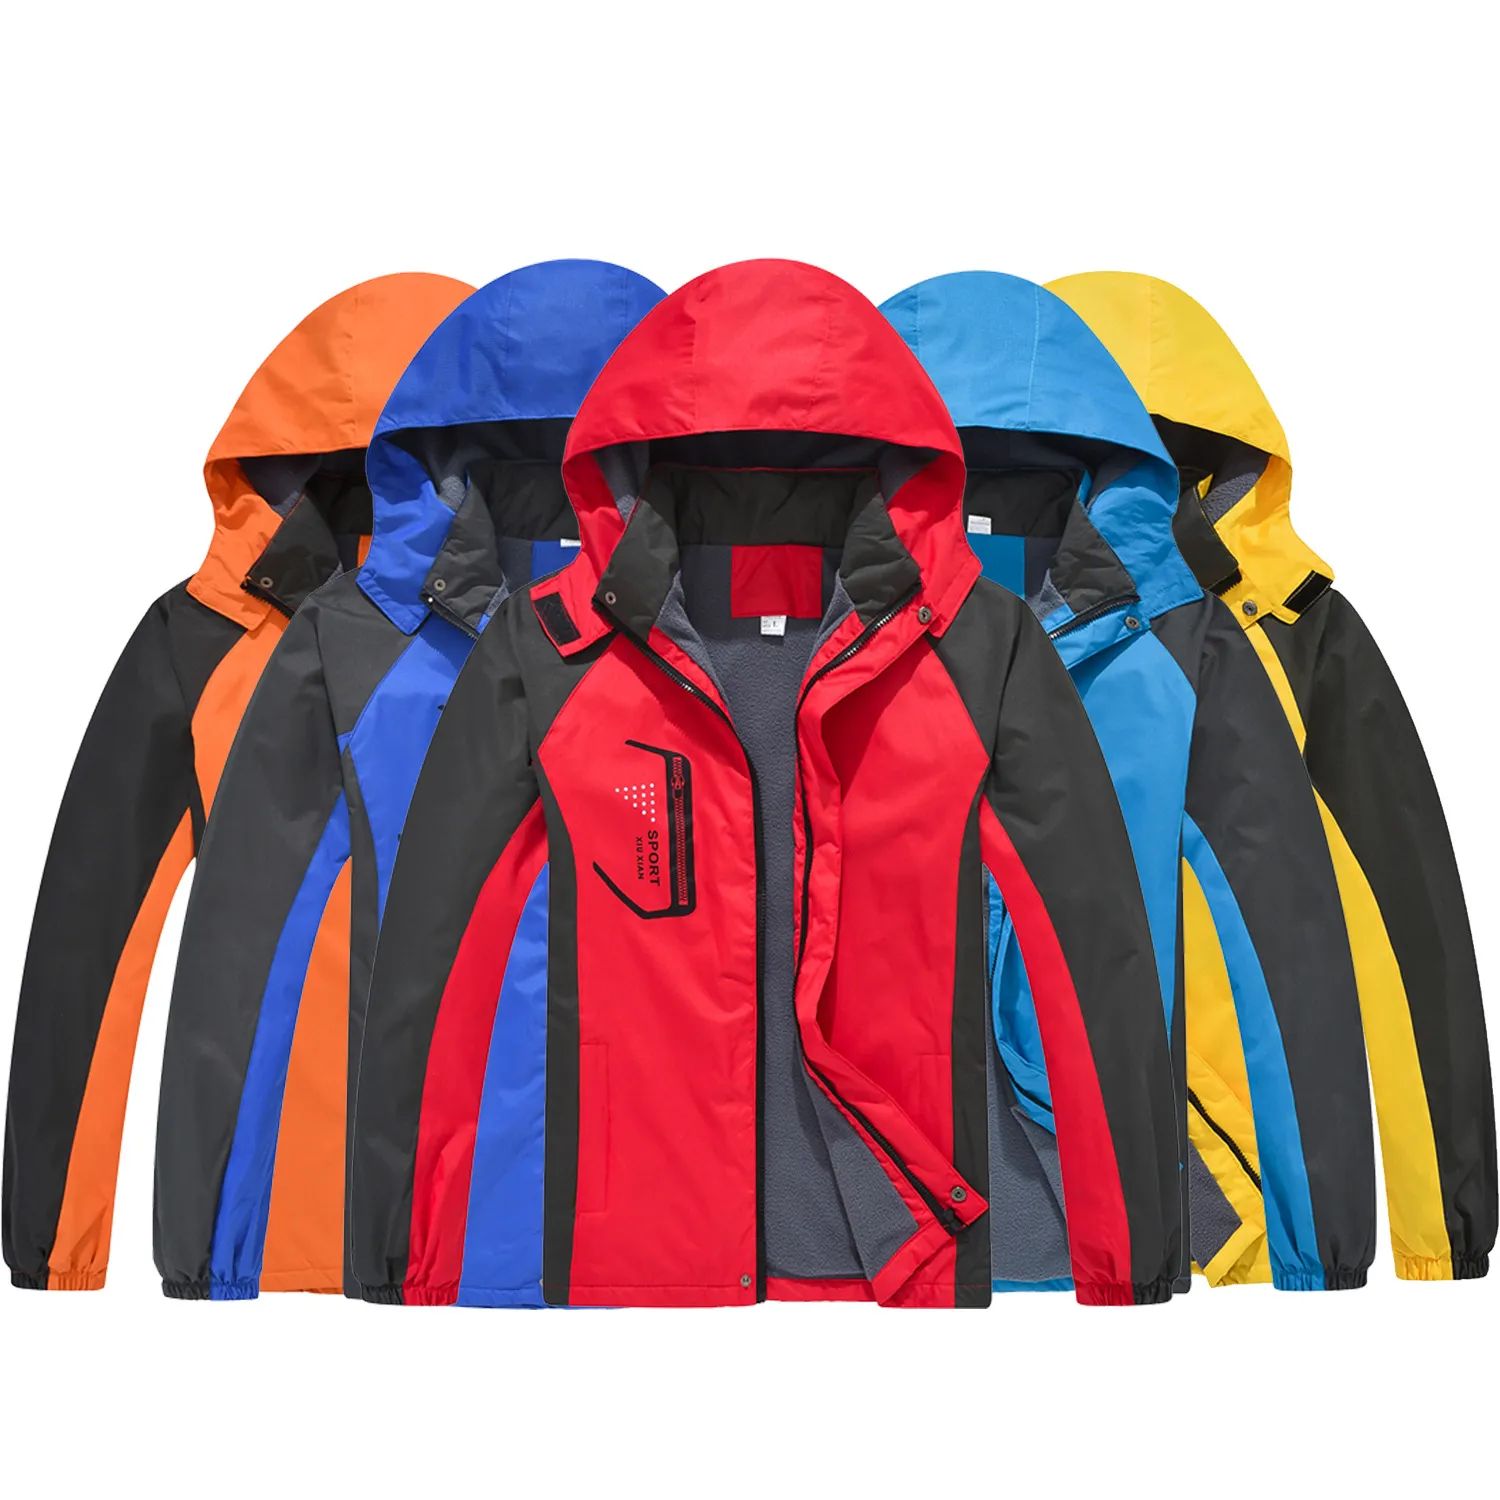 e-baihui 2021 인기 봄과 가을 벨벳 남자 자켓, 방풍 후드 분리형 야외 착용 남자 공장 코트 등산 8816